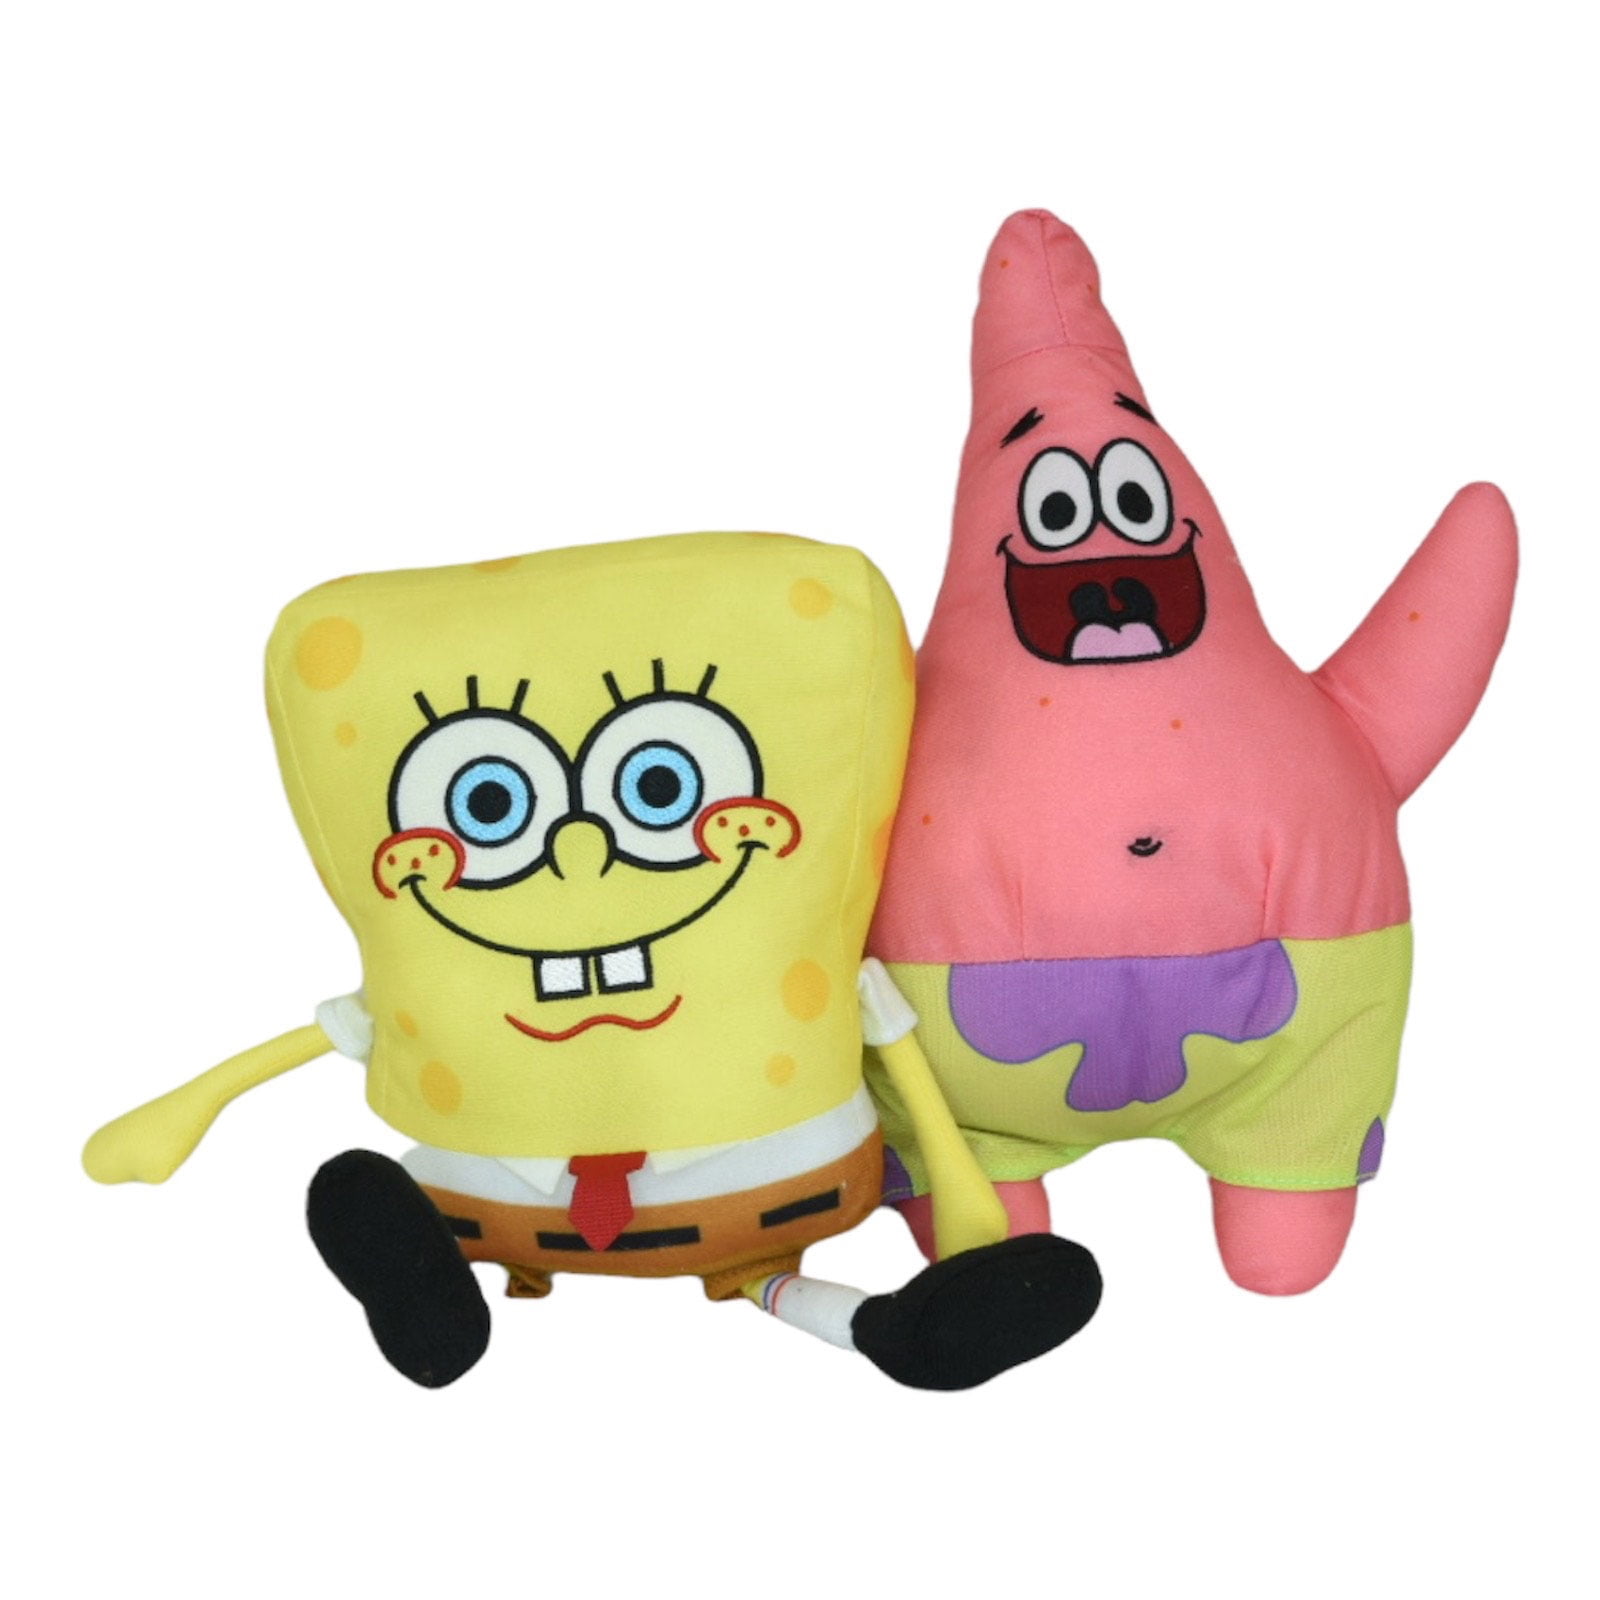 Spongebob 10 Inch and Patrick 11 Inch Stuffed Plush Doll Toy Set 